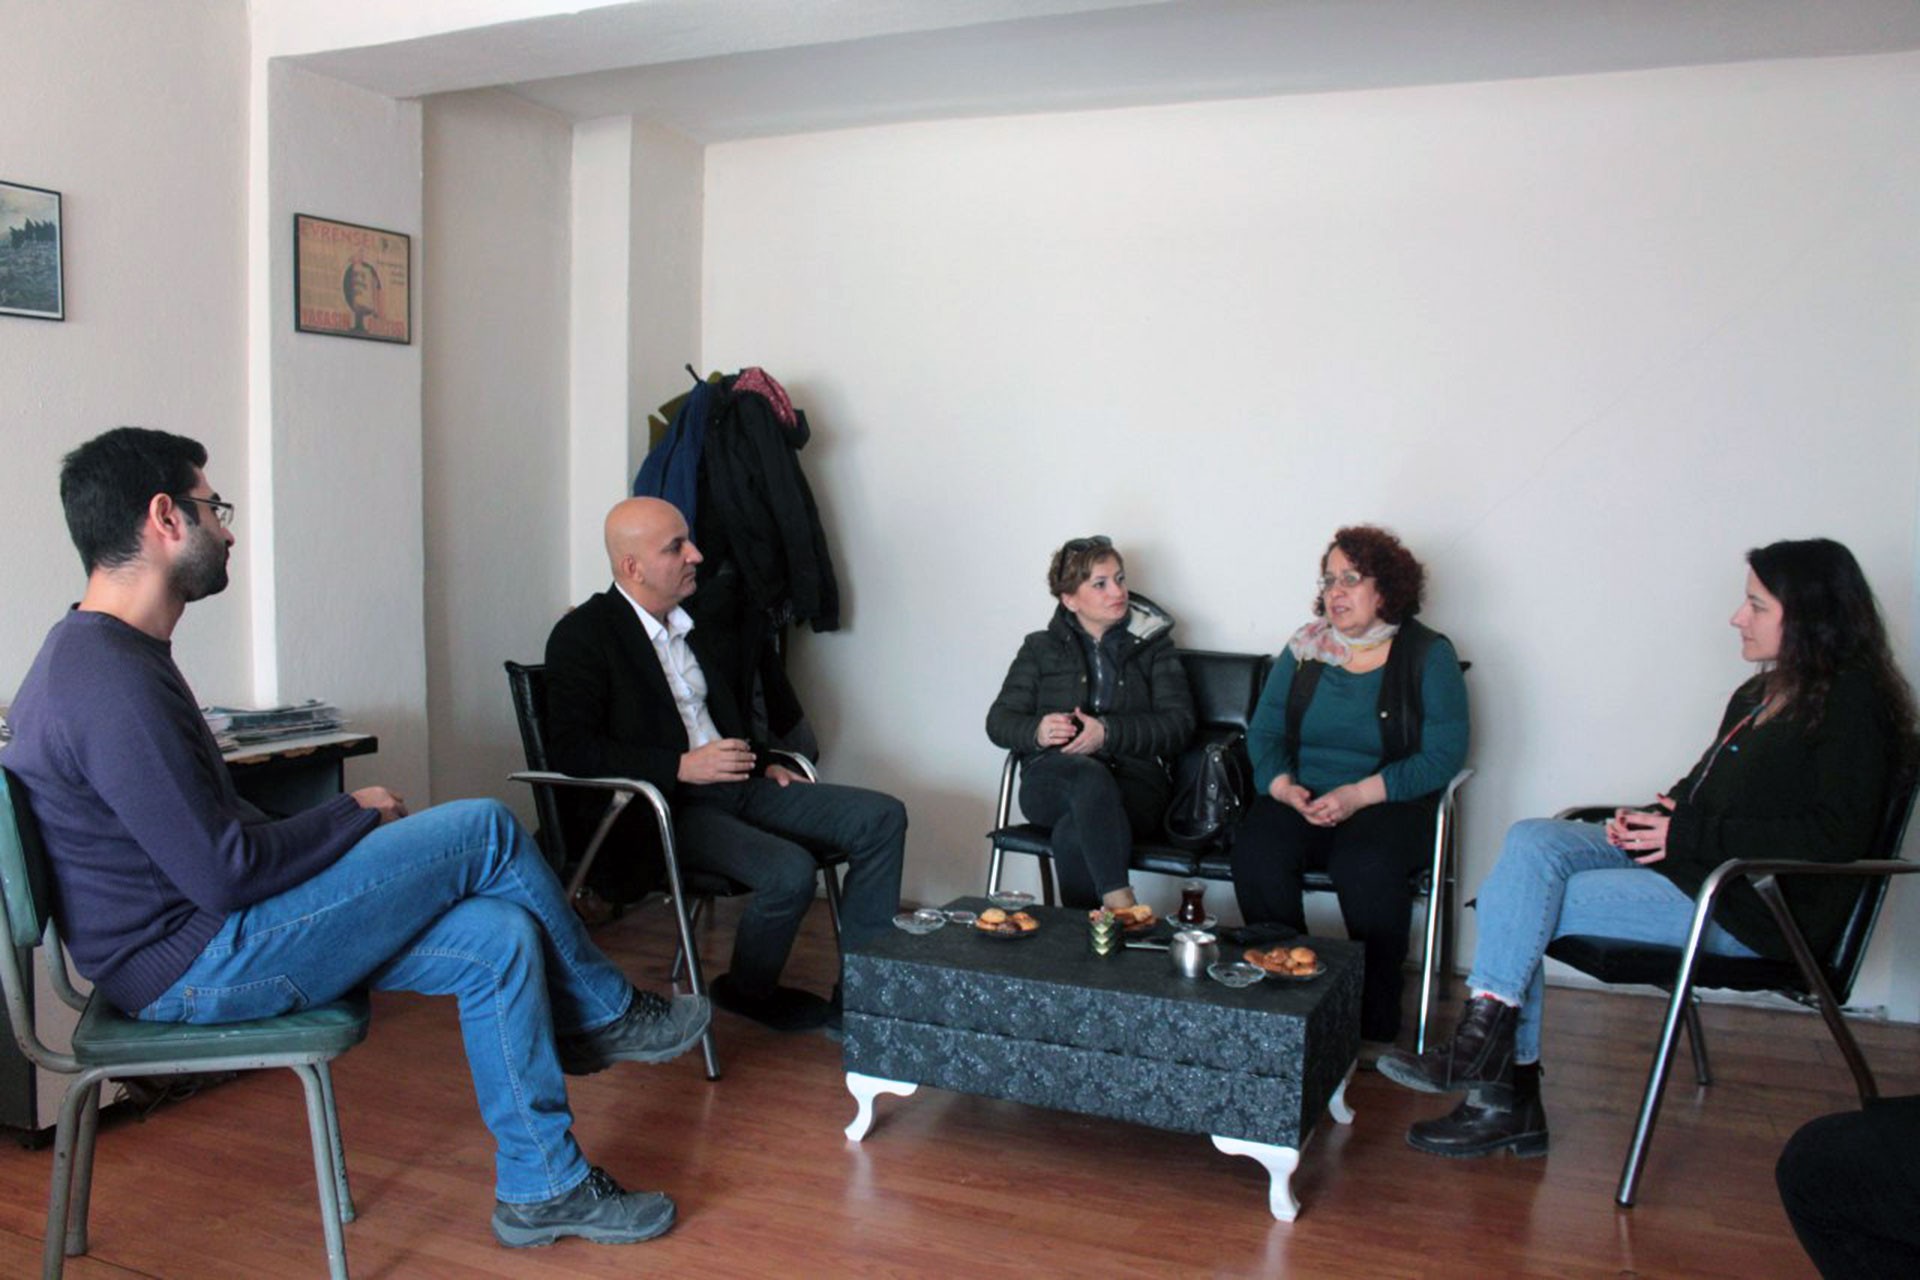 CHP Milletvekili Mahir Polat Evrensel'i ziyareti sırasında sohbet ederken